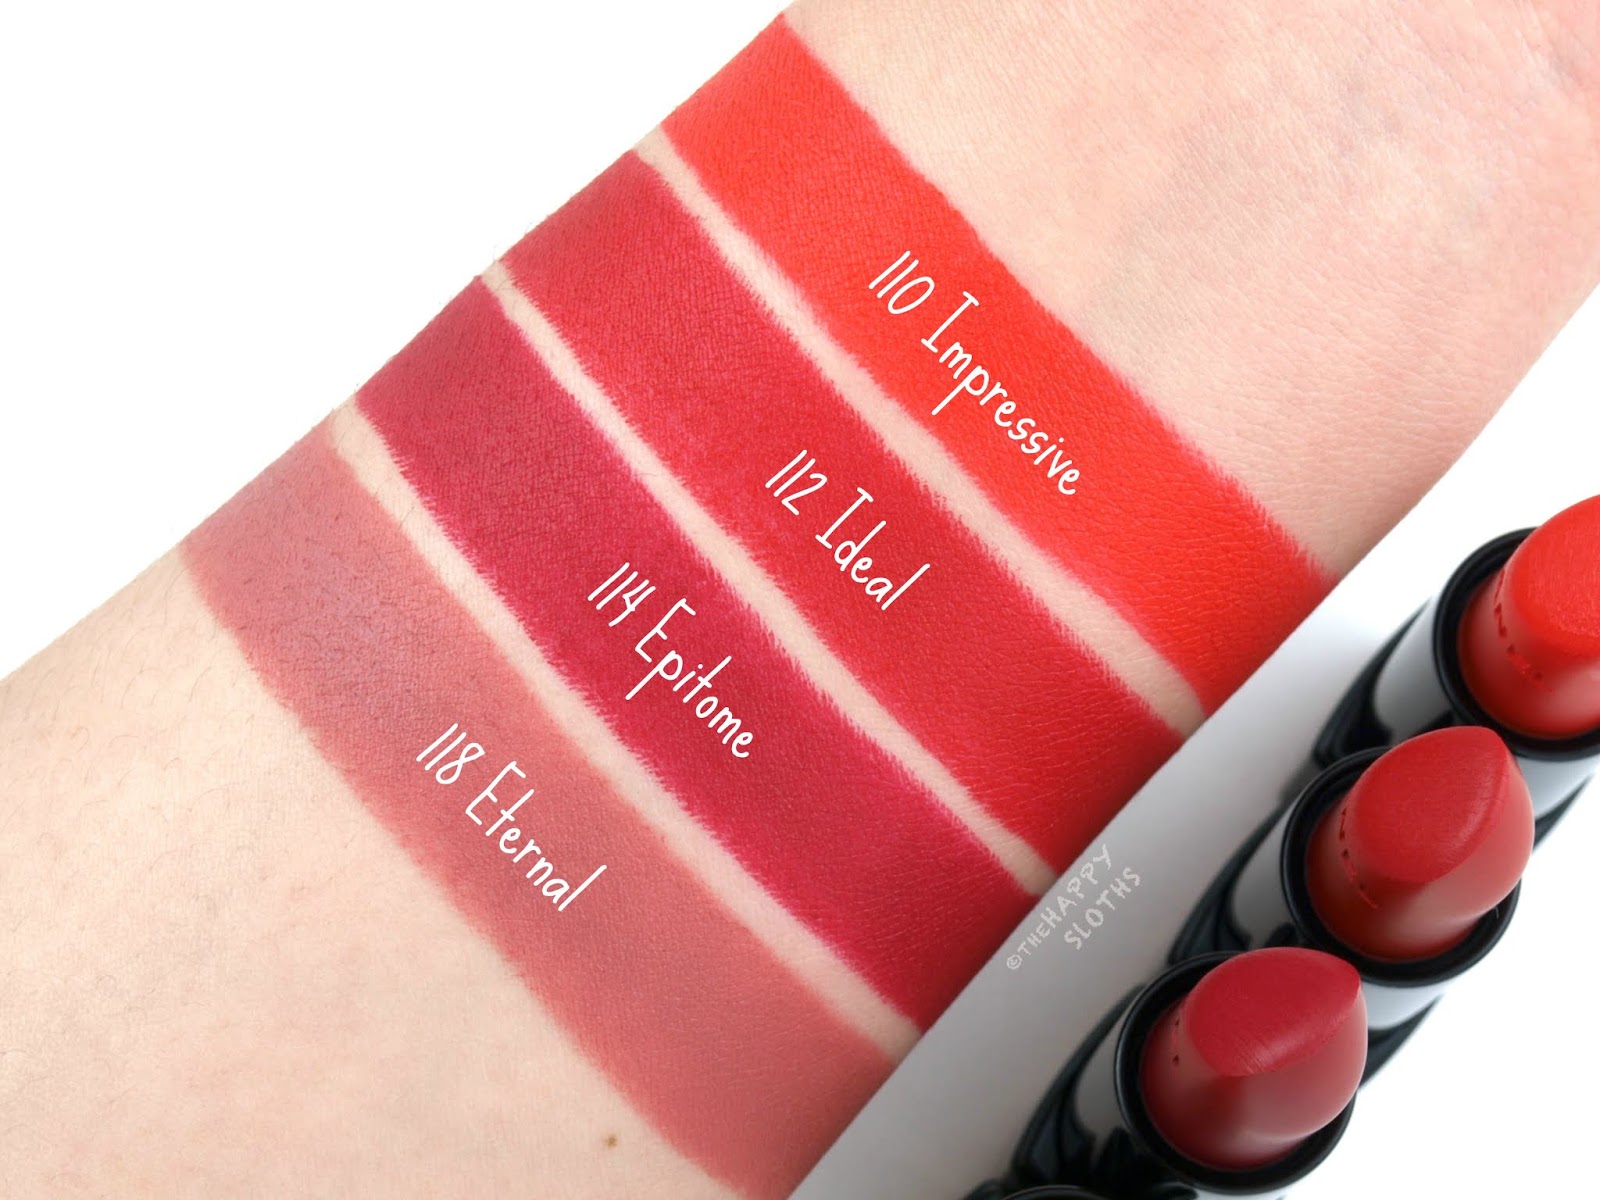 Định nghĩa lại sắc đỏ trong BST son Rouge Allure Velvet của Chanel   LUXUOVN